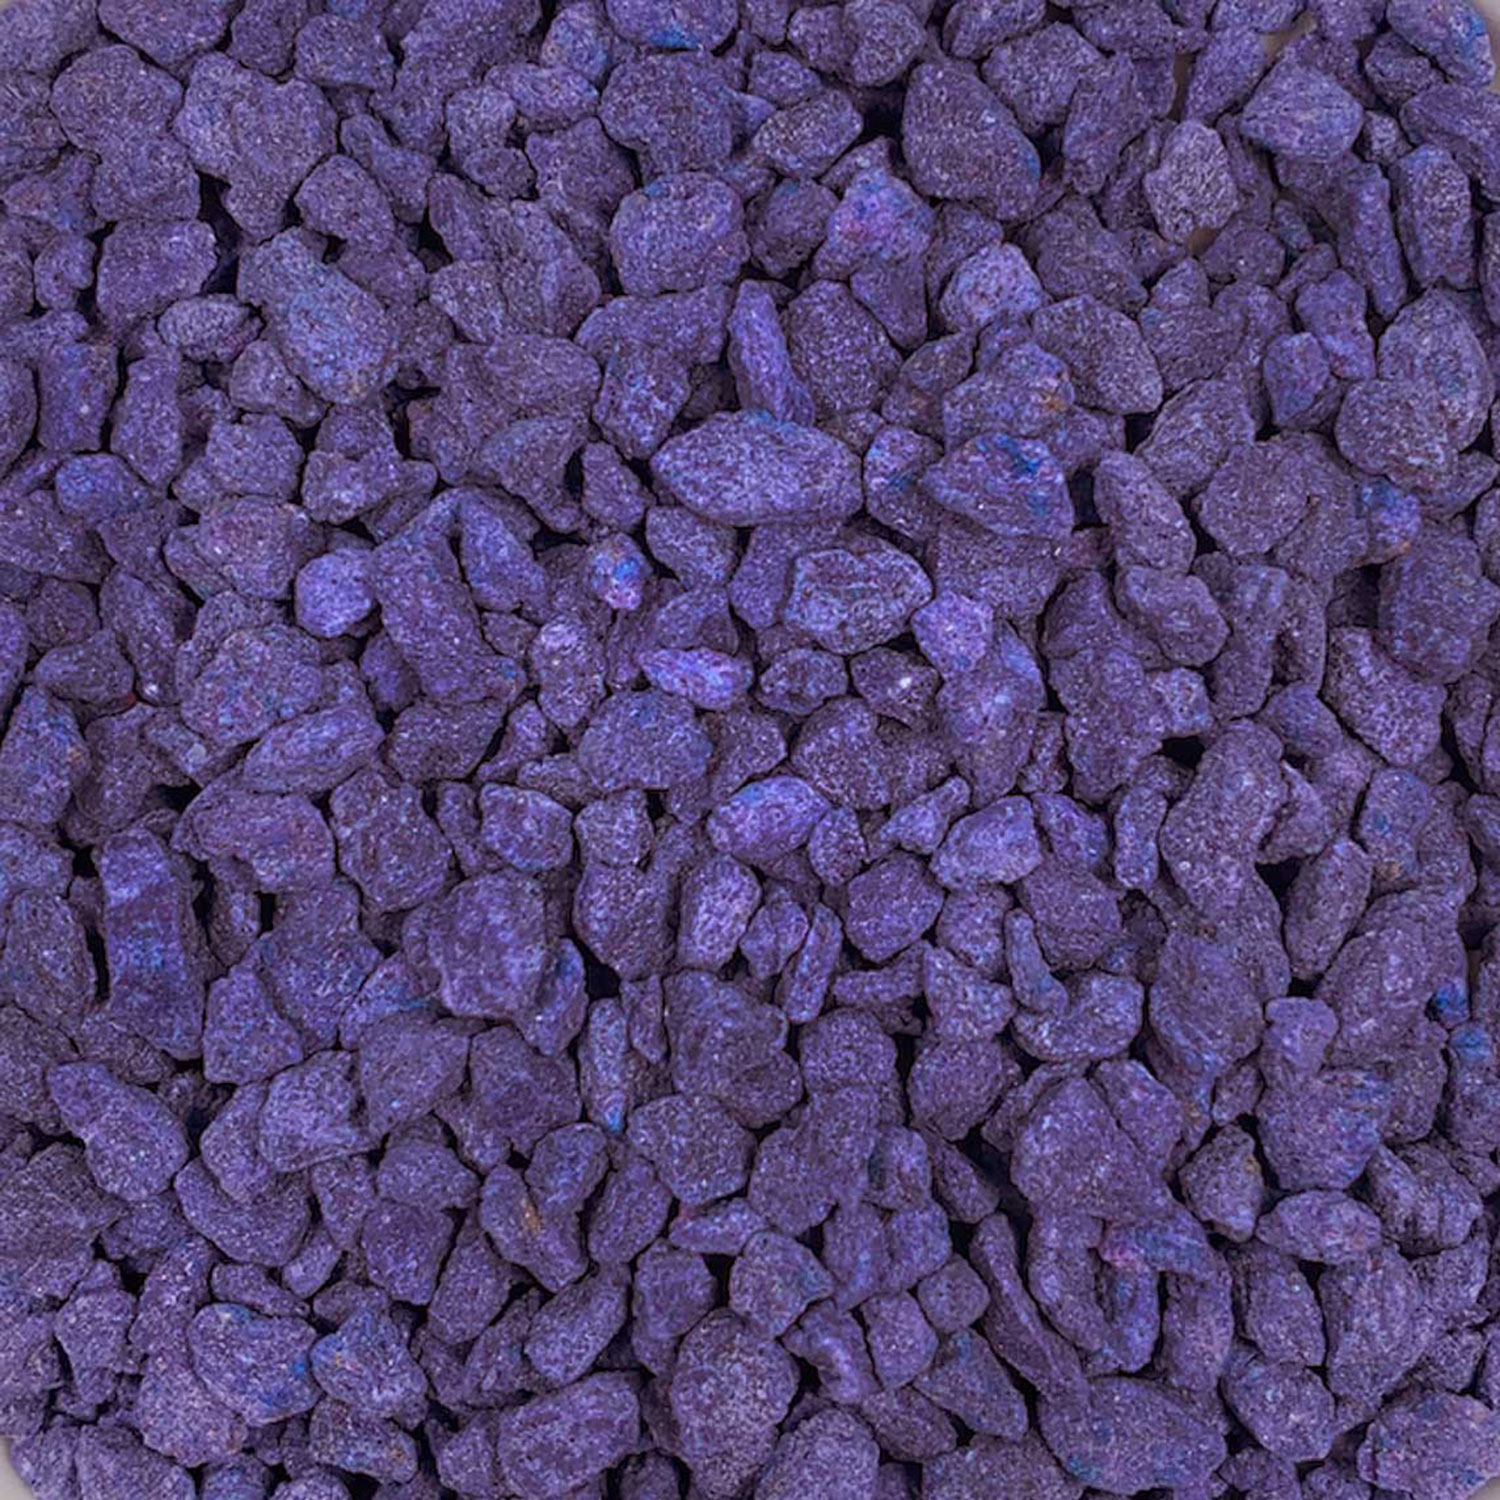 Blueberry Tidbits